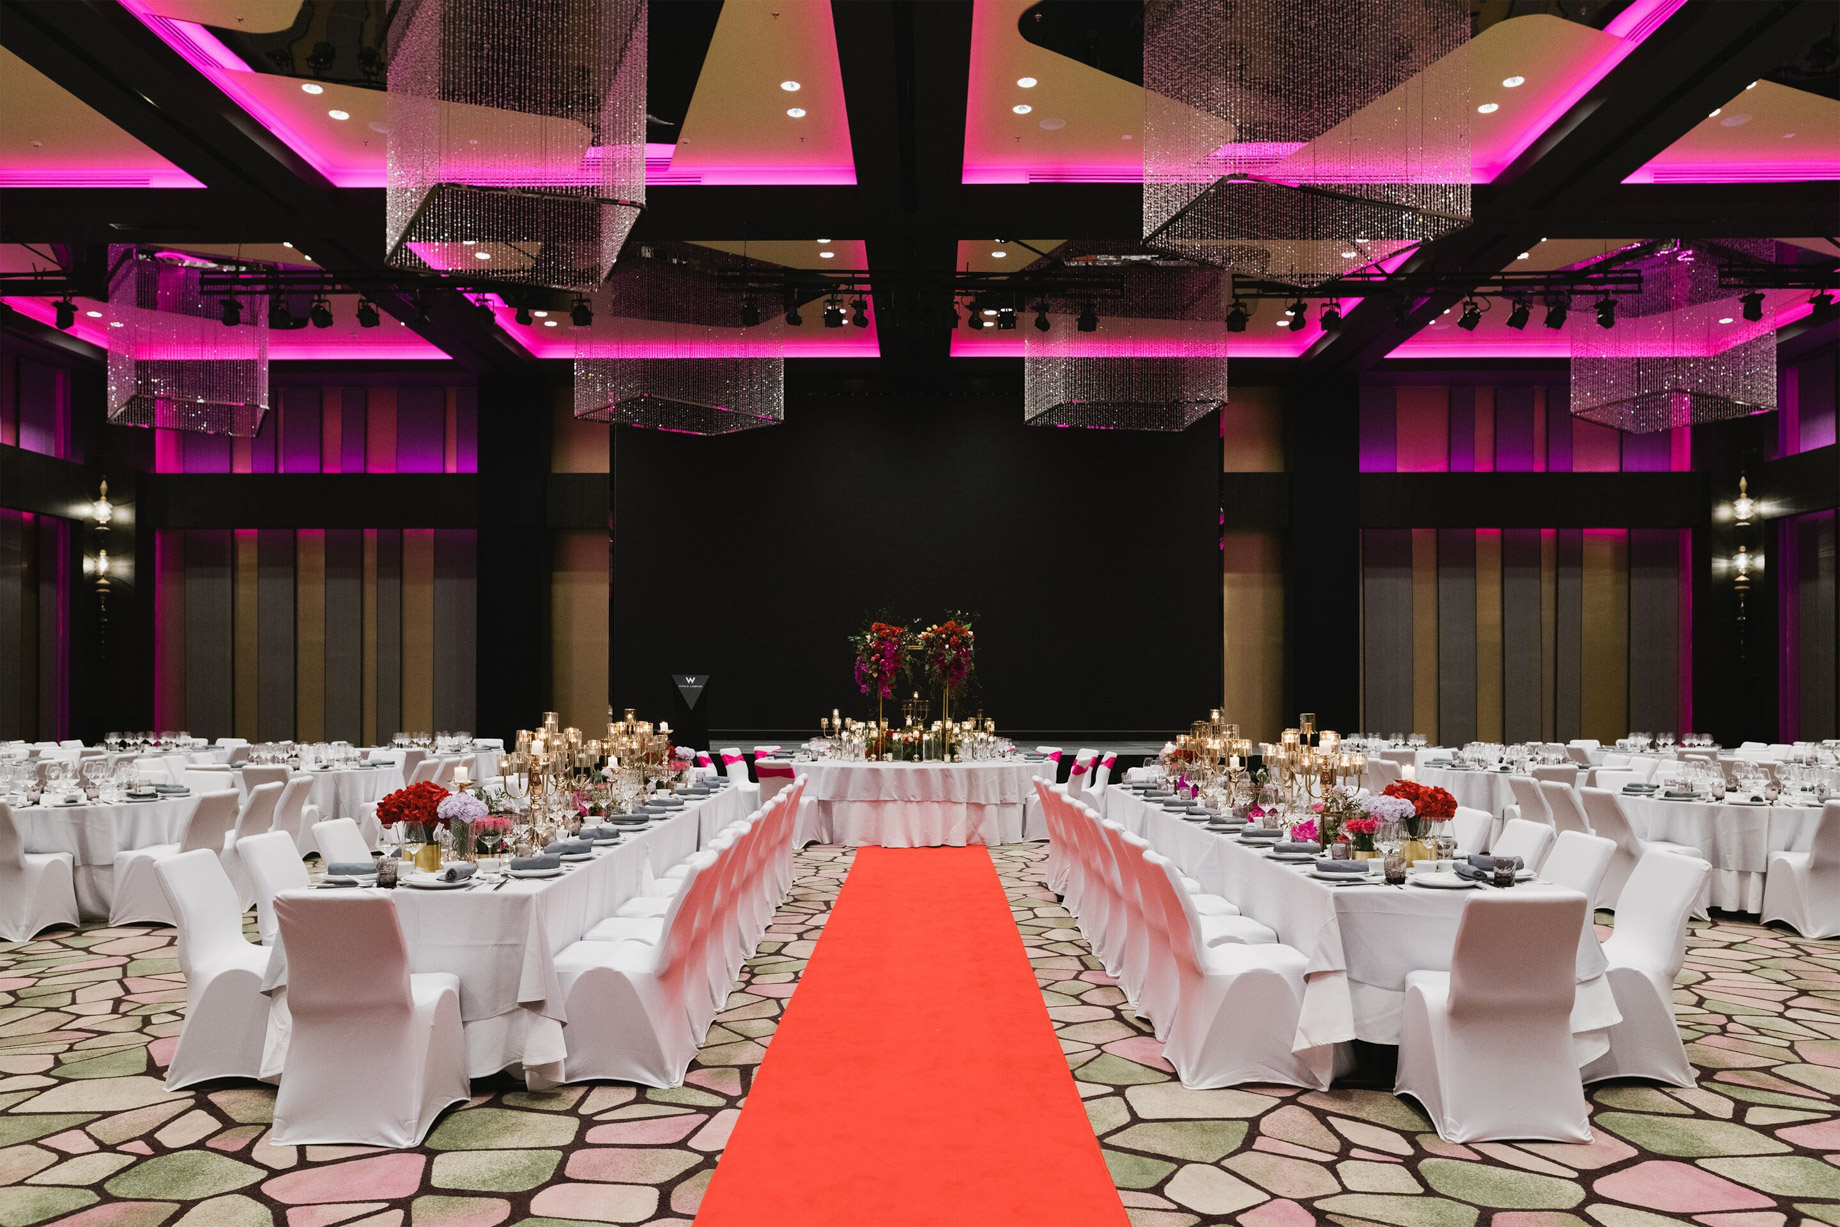 W Kuala Lumpur Hotel – Kuala Lumpur, Malaysia – Great Room Wedding Reception Setup